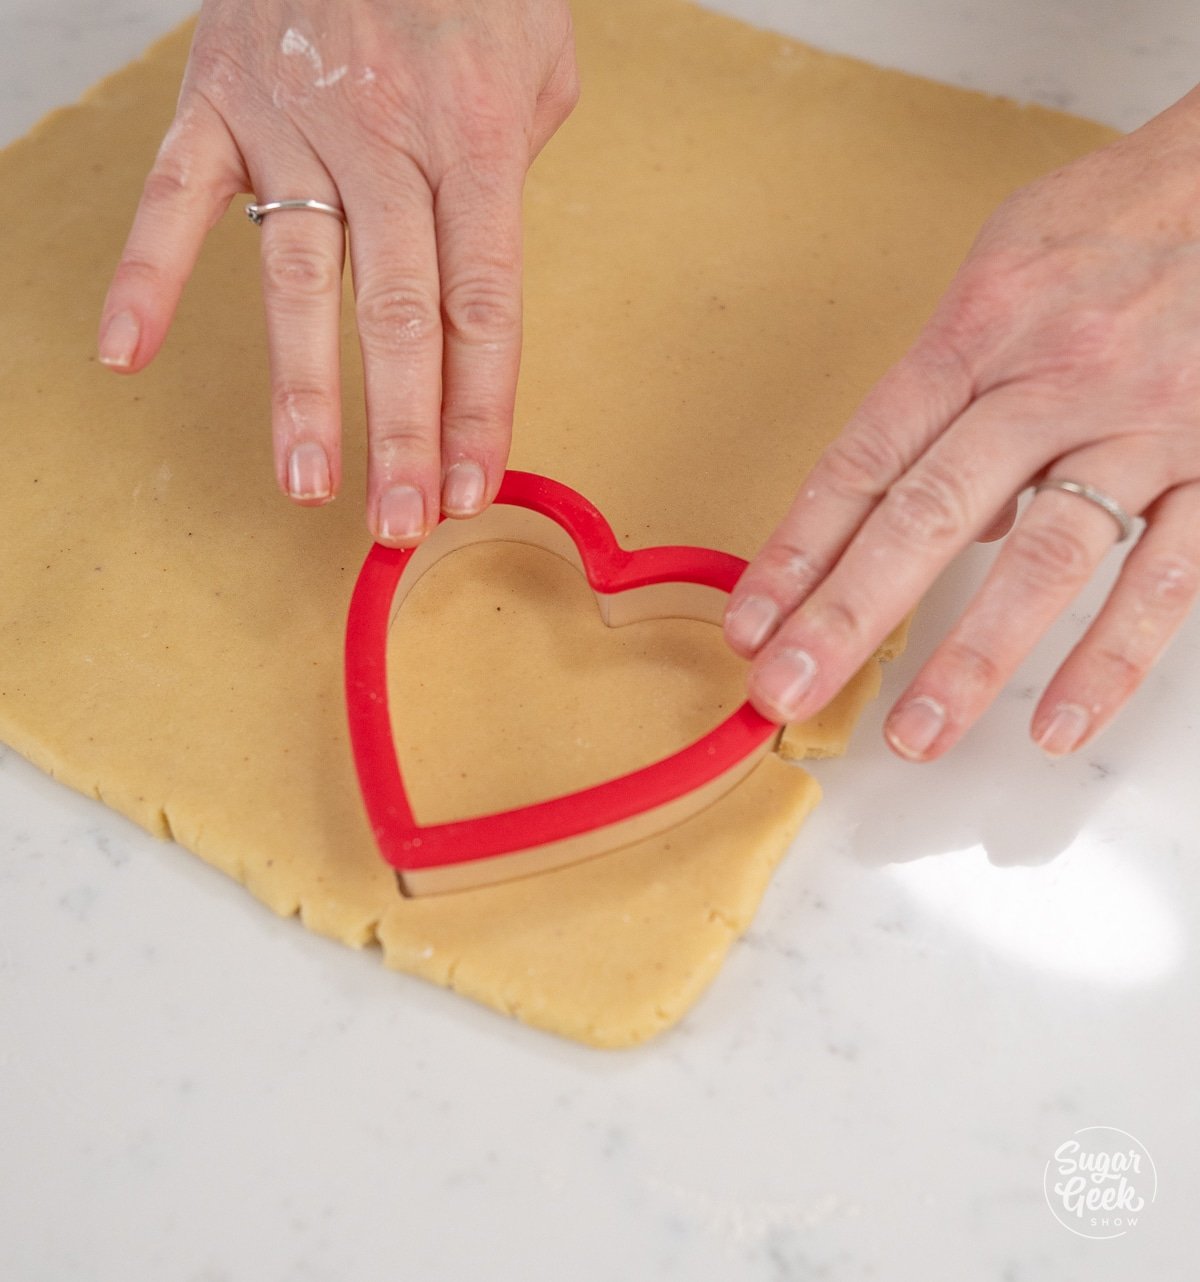 hands using heart cutter to cut heart shaped cookies.